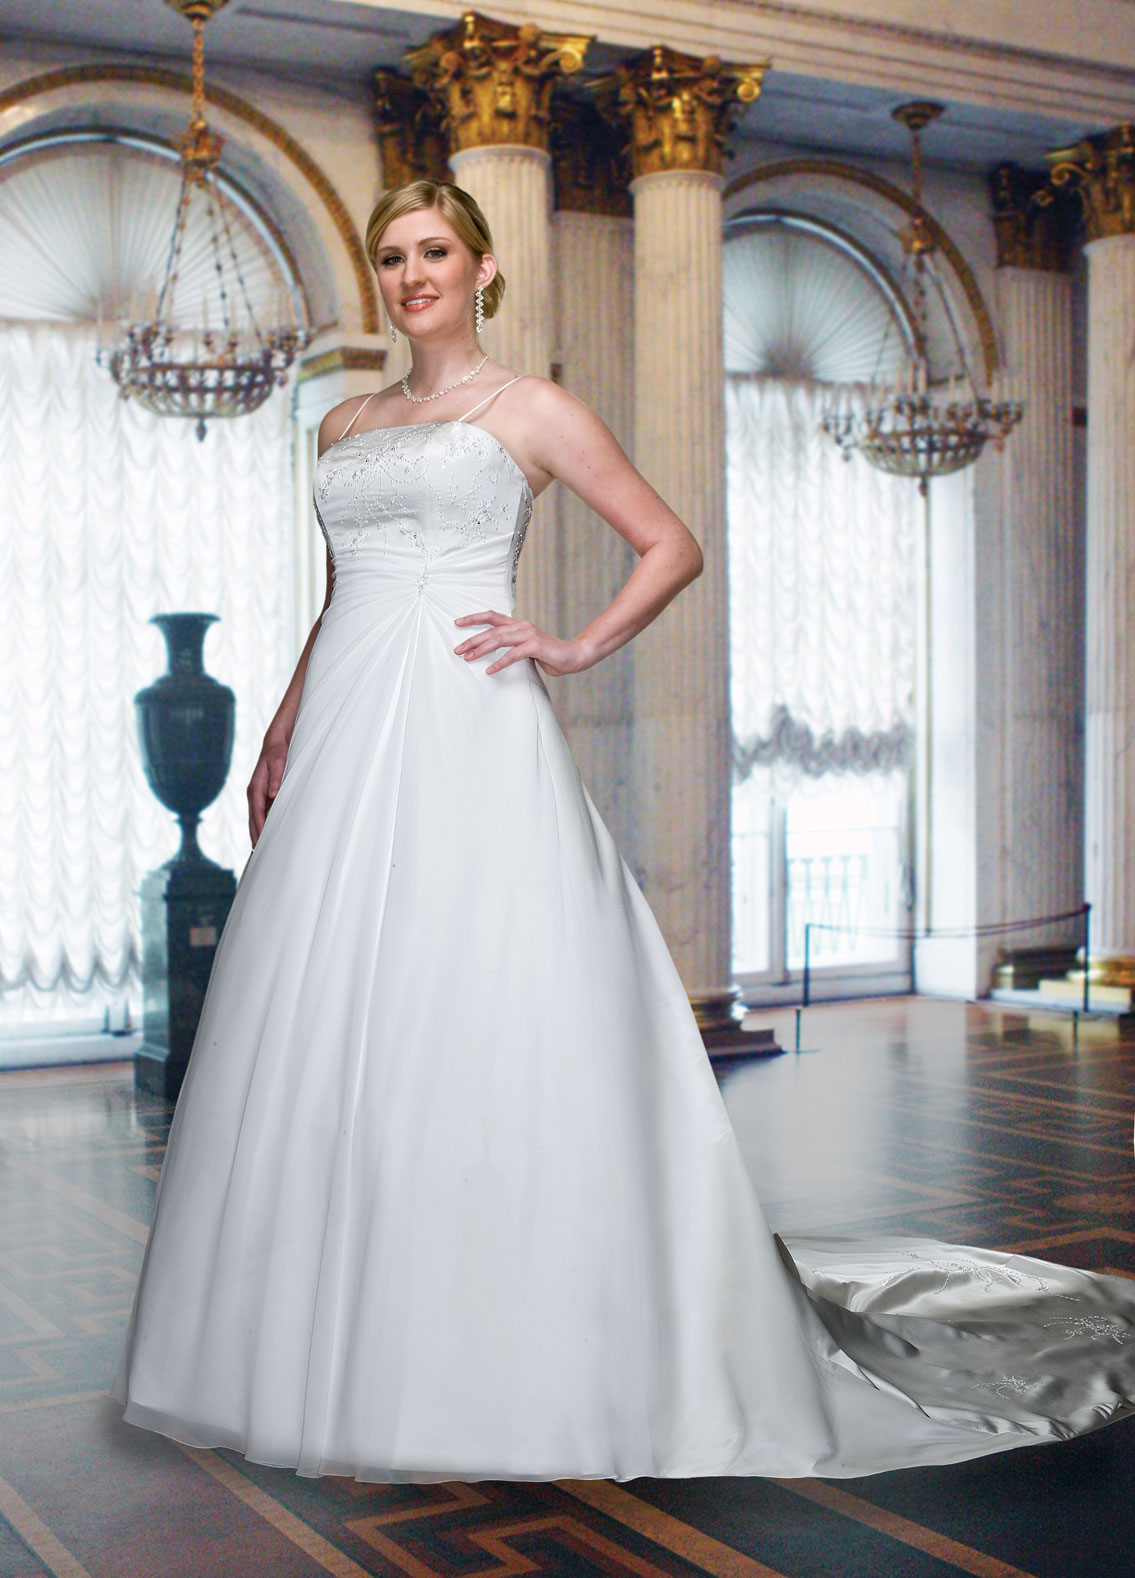 Full Figure Wedding Dresses Top 10 full figure wedding dresses - Find ...